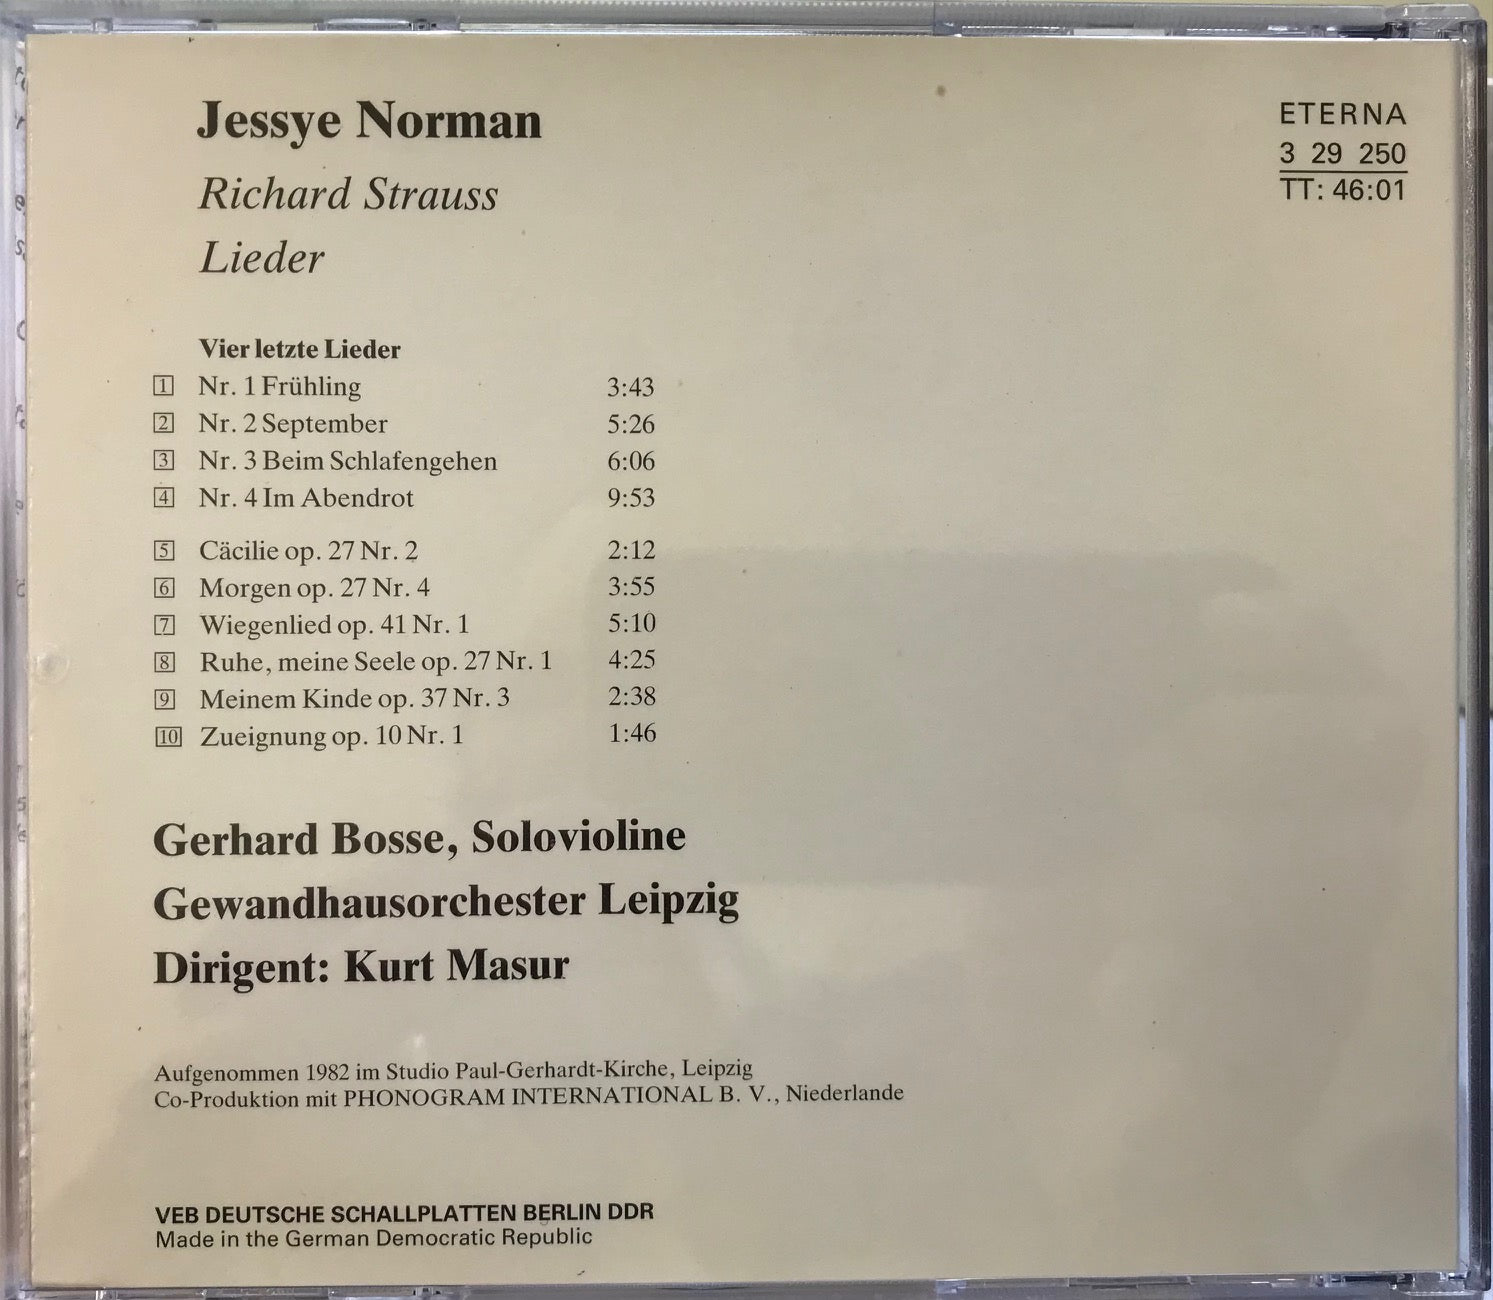 Jessye Norman - Richard Strauss Lieder (CD)